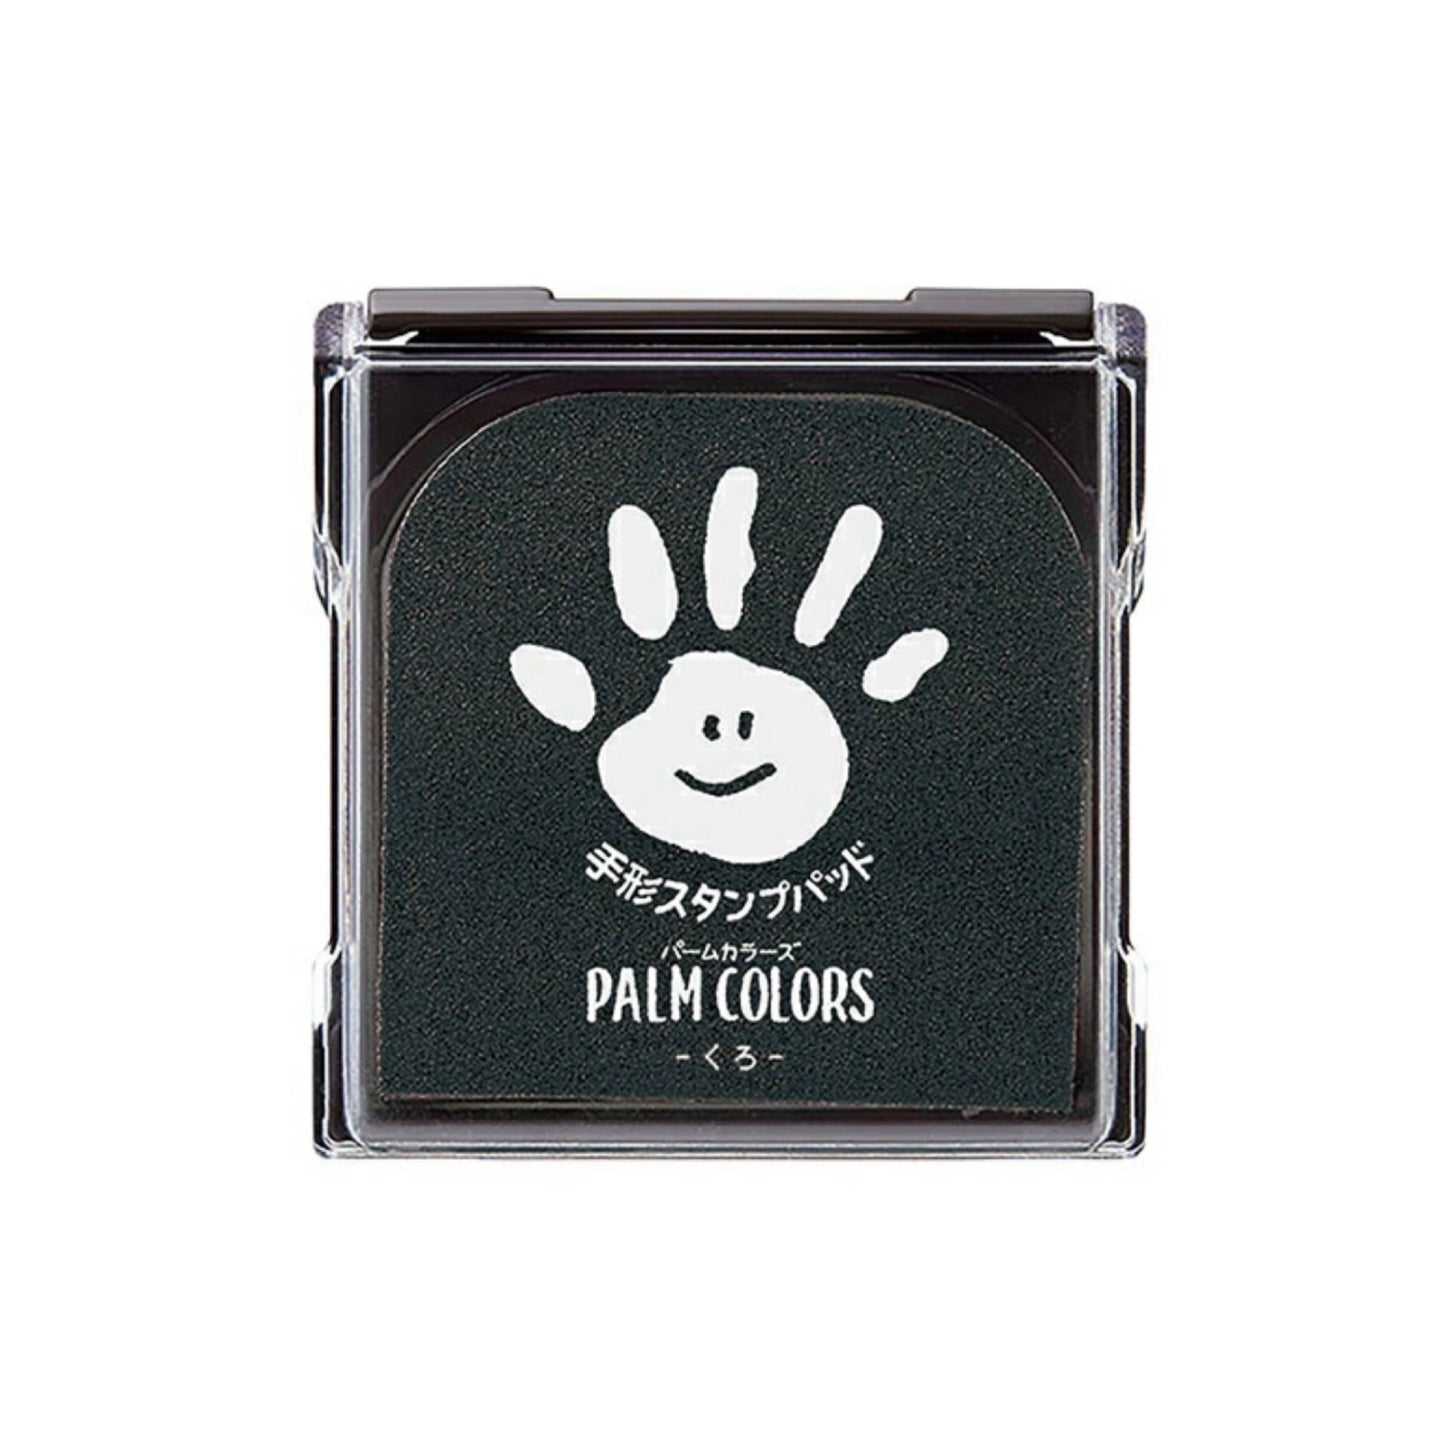 stamp pad (black) / palm colors